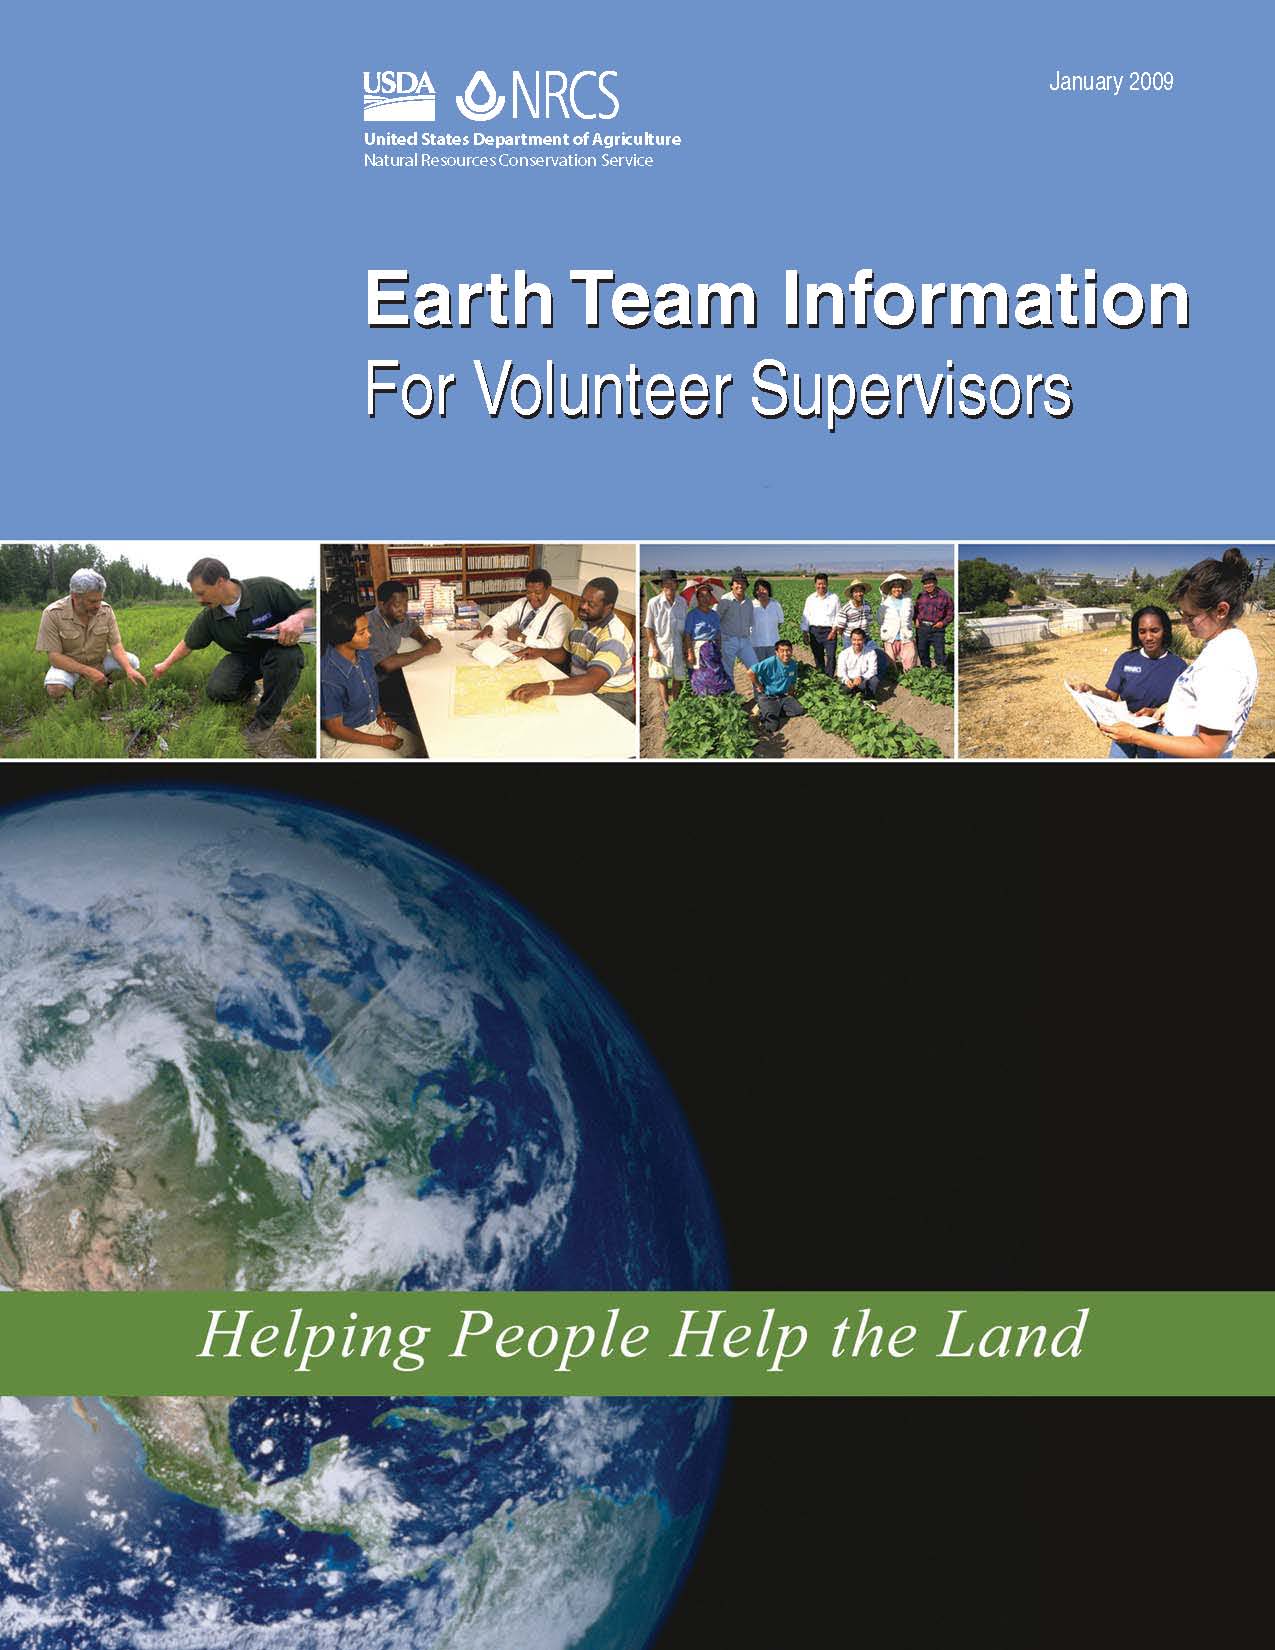 Earth Team Information for Volunteer Supervisors